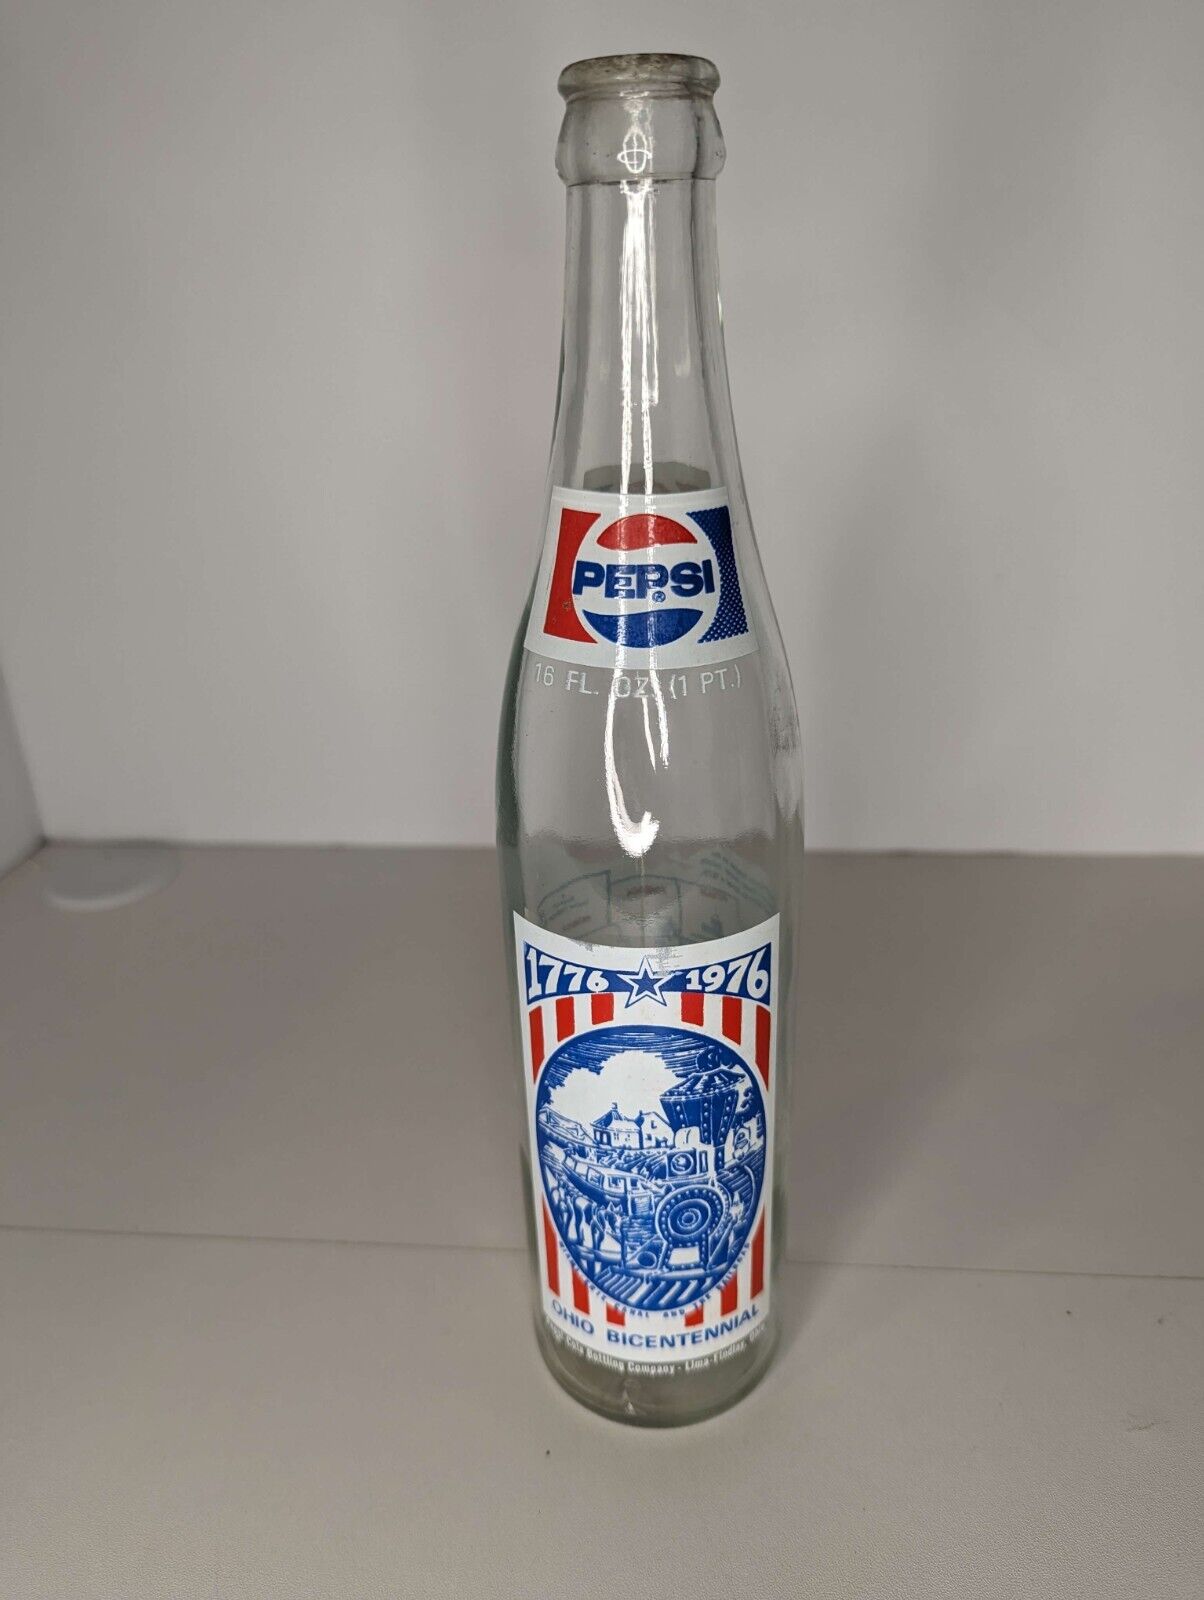 1776/1976 Ohio Bicentennial Commemorative Pepsi Glass Bottle Soda Pop (11A)